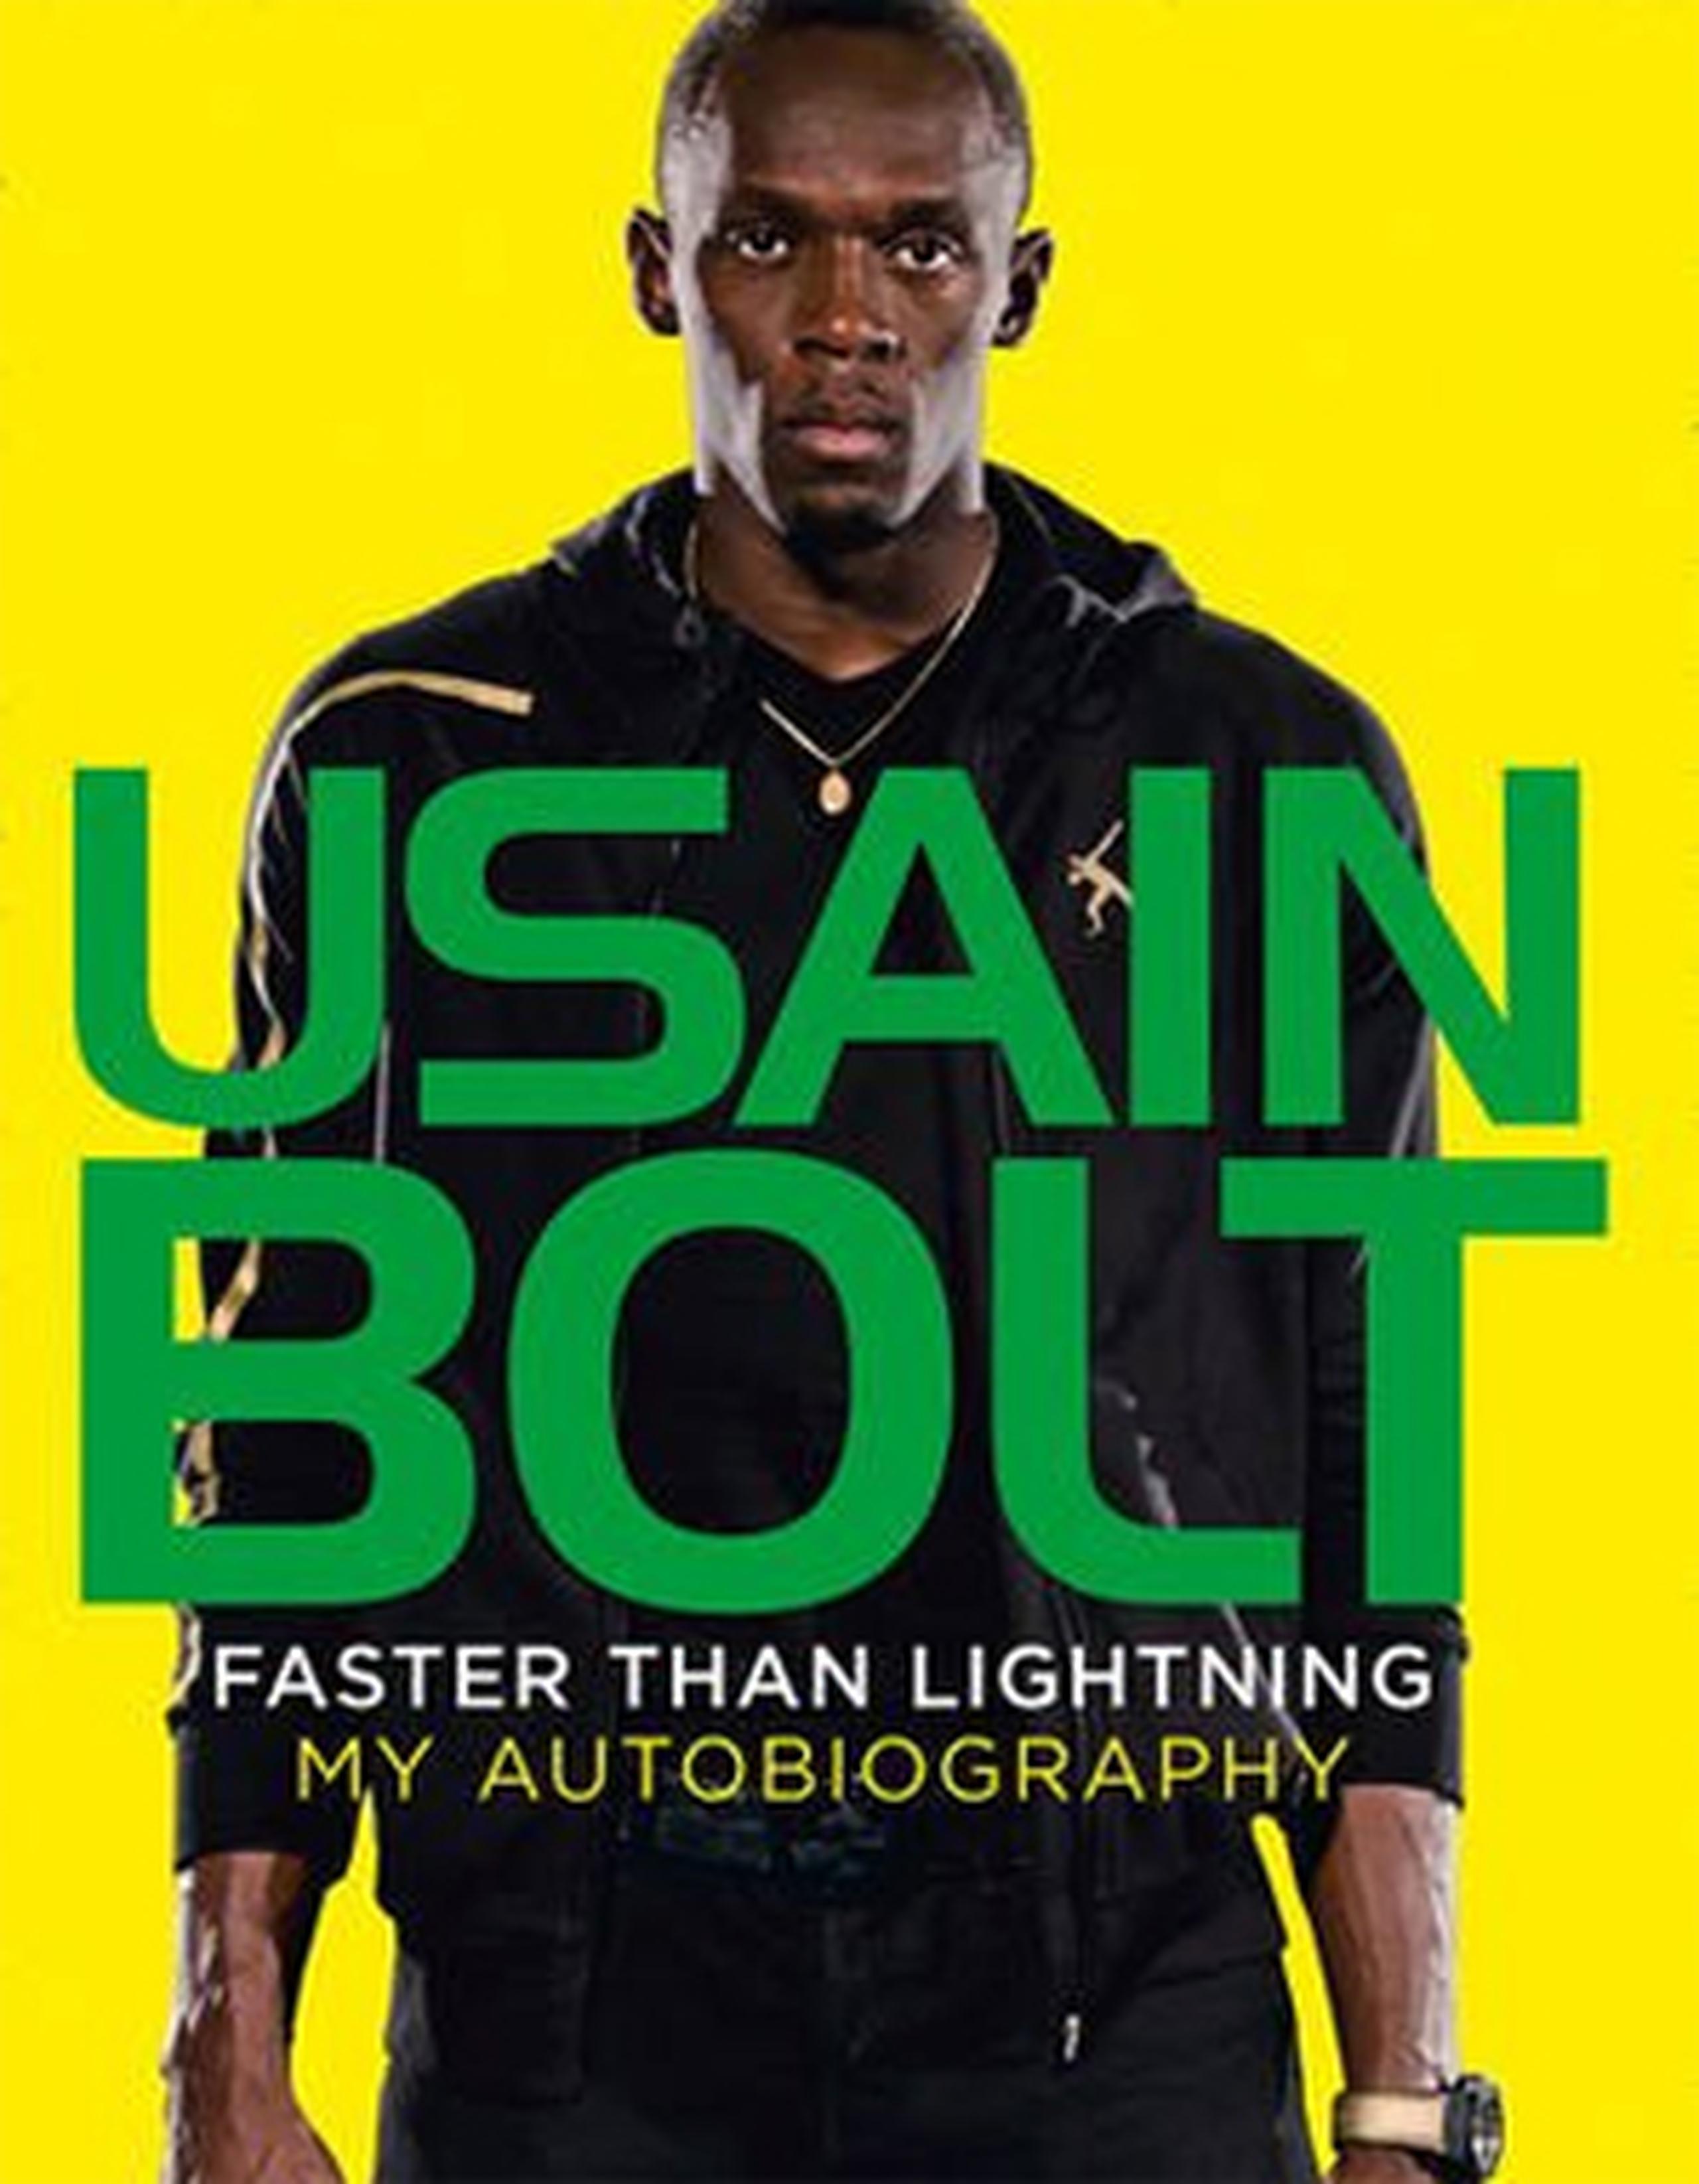 Carátula de la biografía de Usain Bolt.